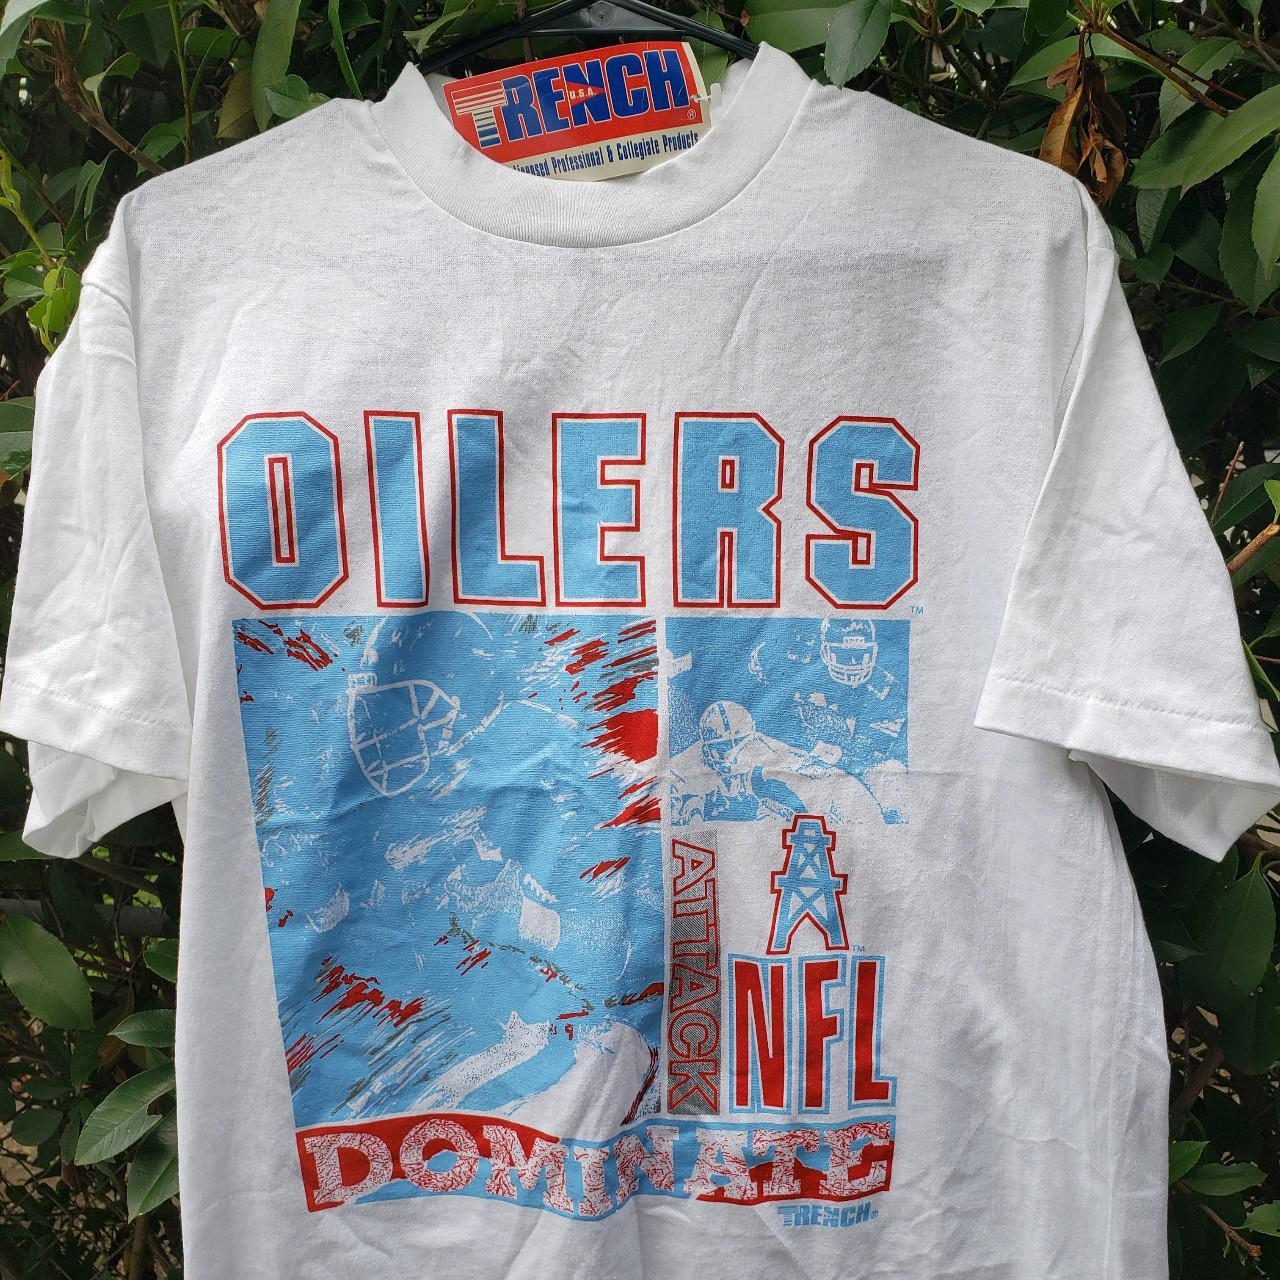 Houston Oilers Vintage Nfl Art Kids T-Shirt